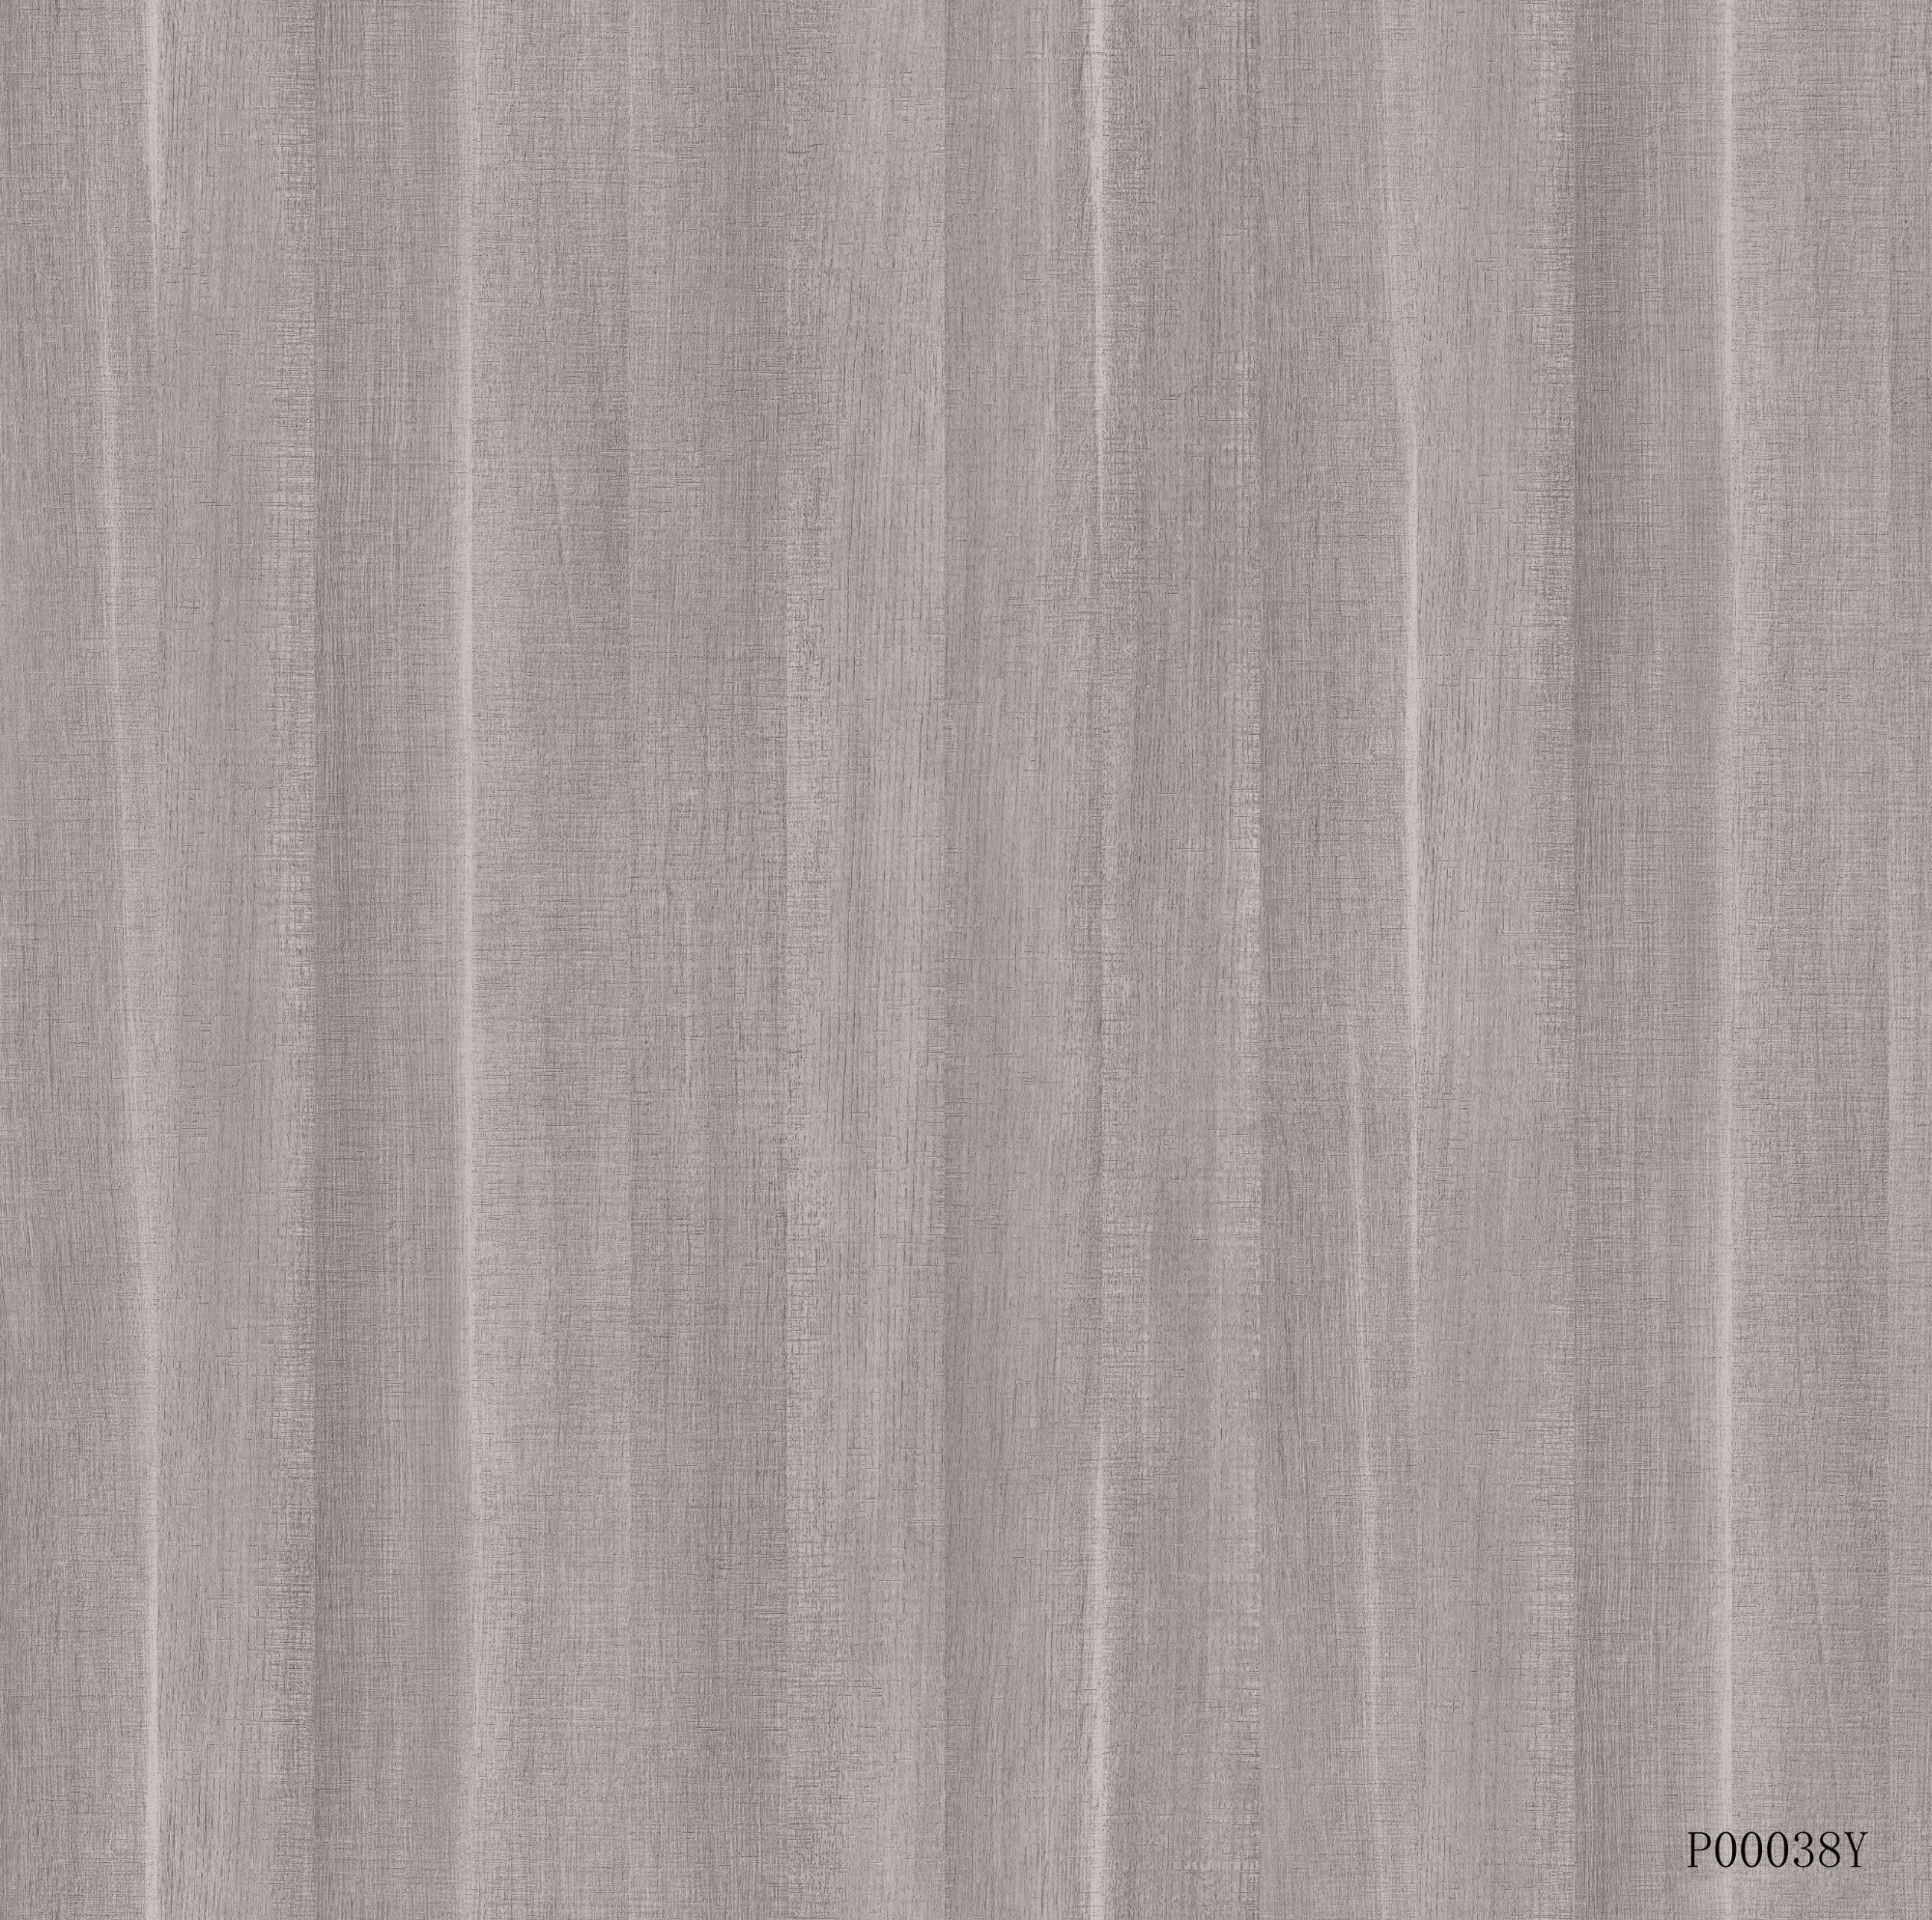 P00038Y Melamine paper with wood grain